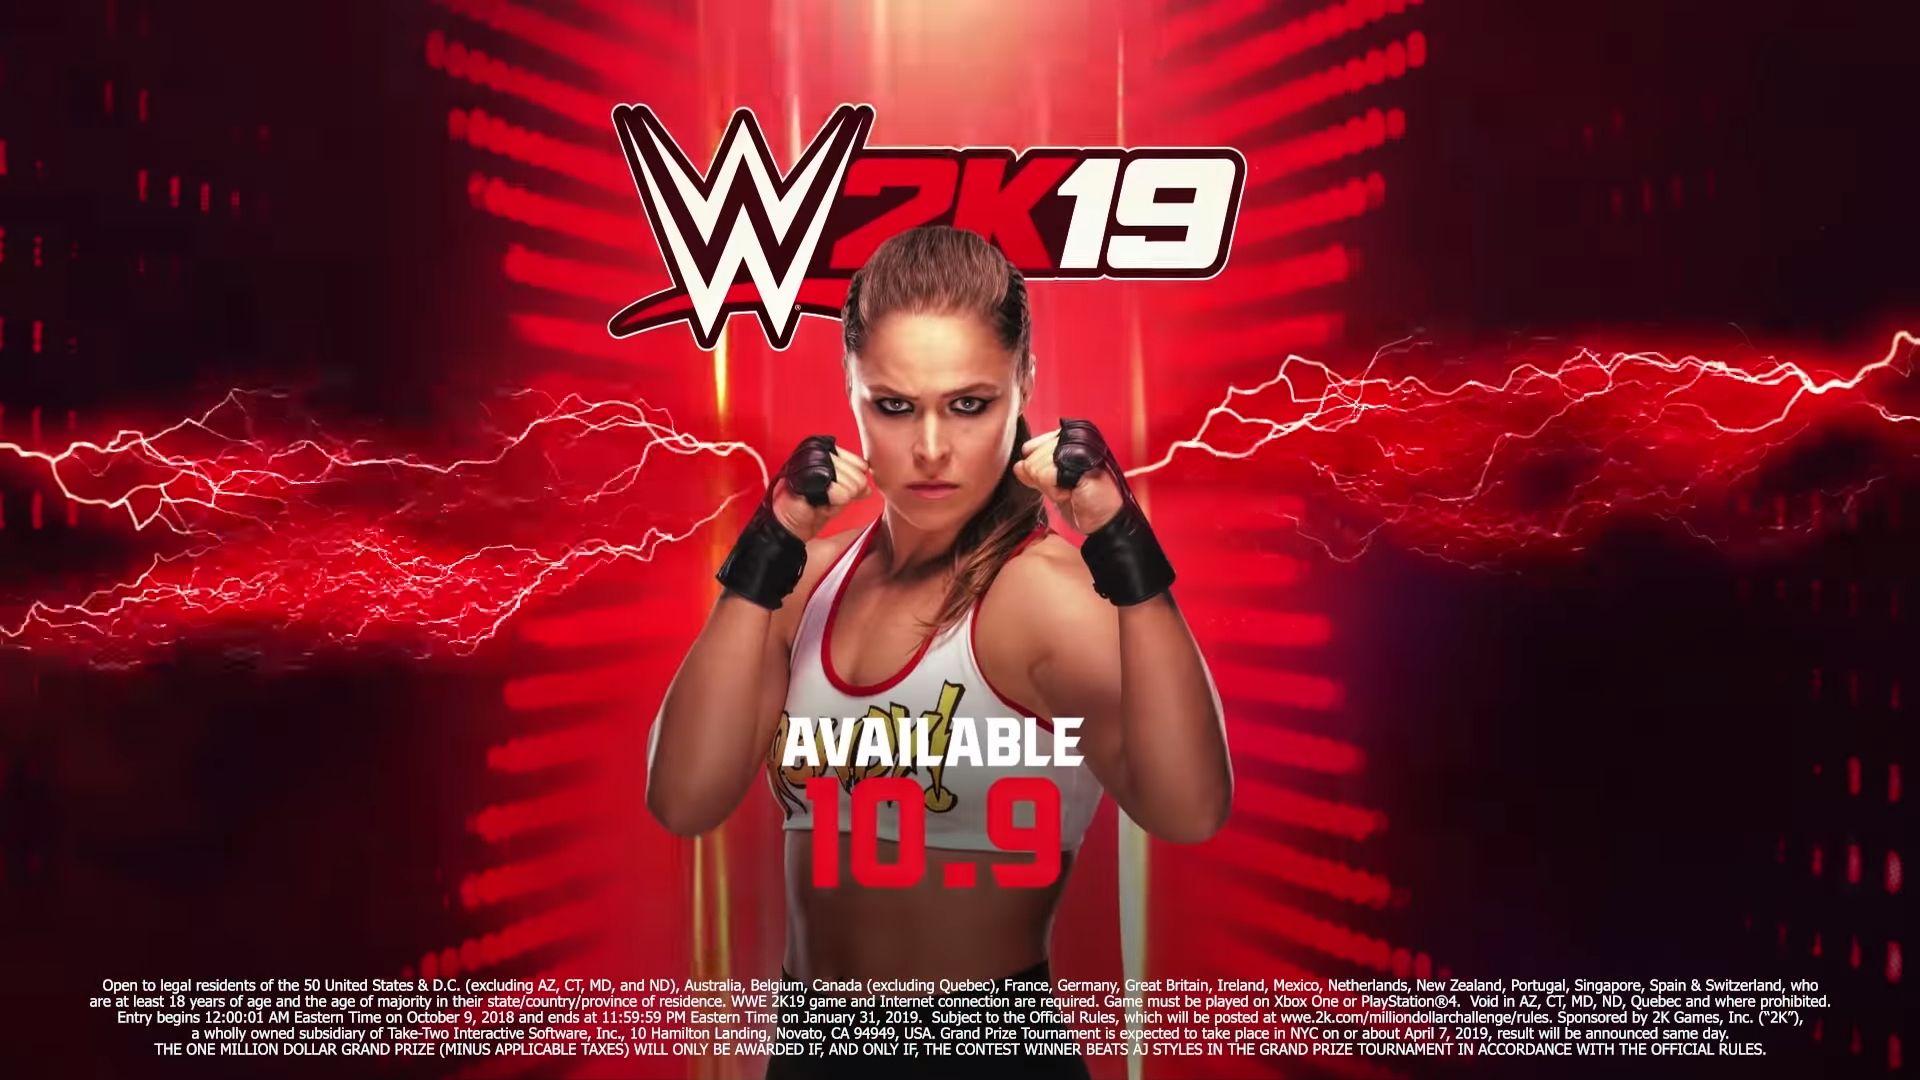 Ronda Rousey Joins WWE 2K19 As A Pre Order Bonus